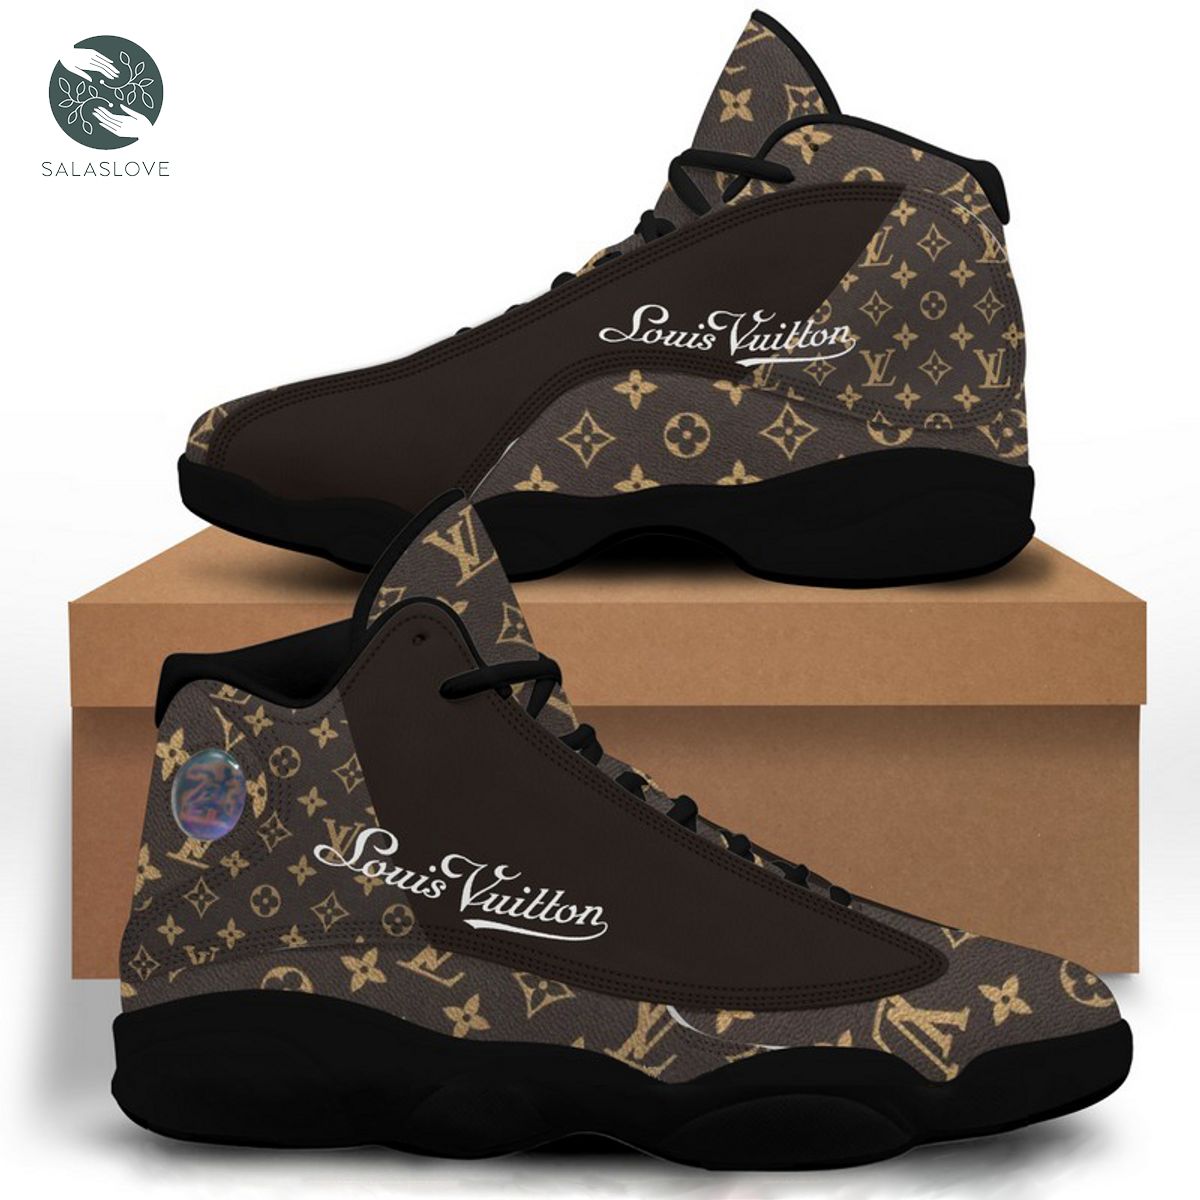 New Louis Vuitton Brown Air Jordan 13 Sneakers Shoes